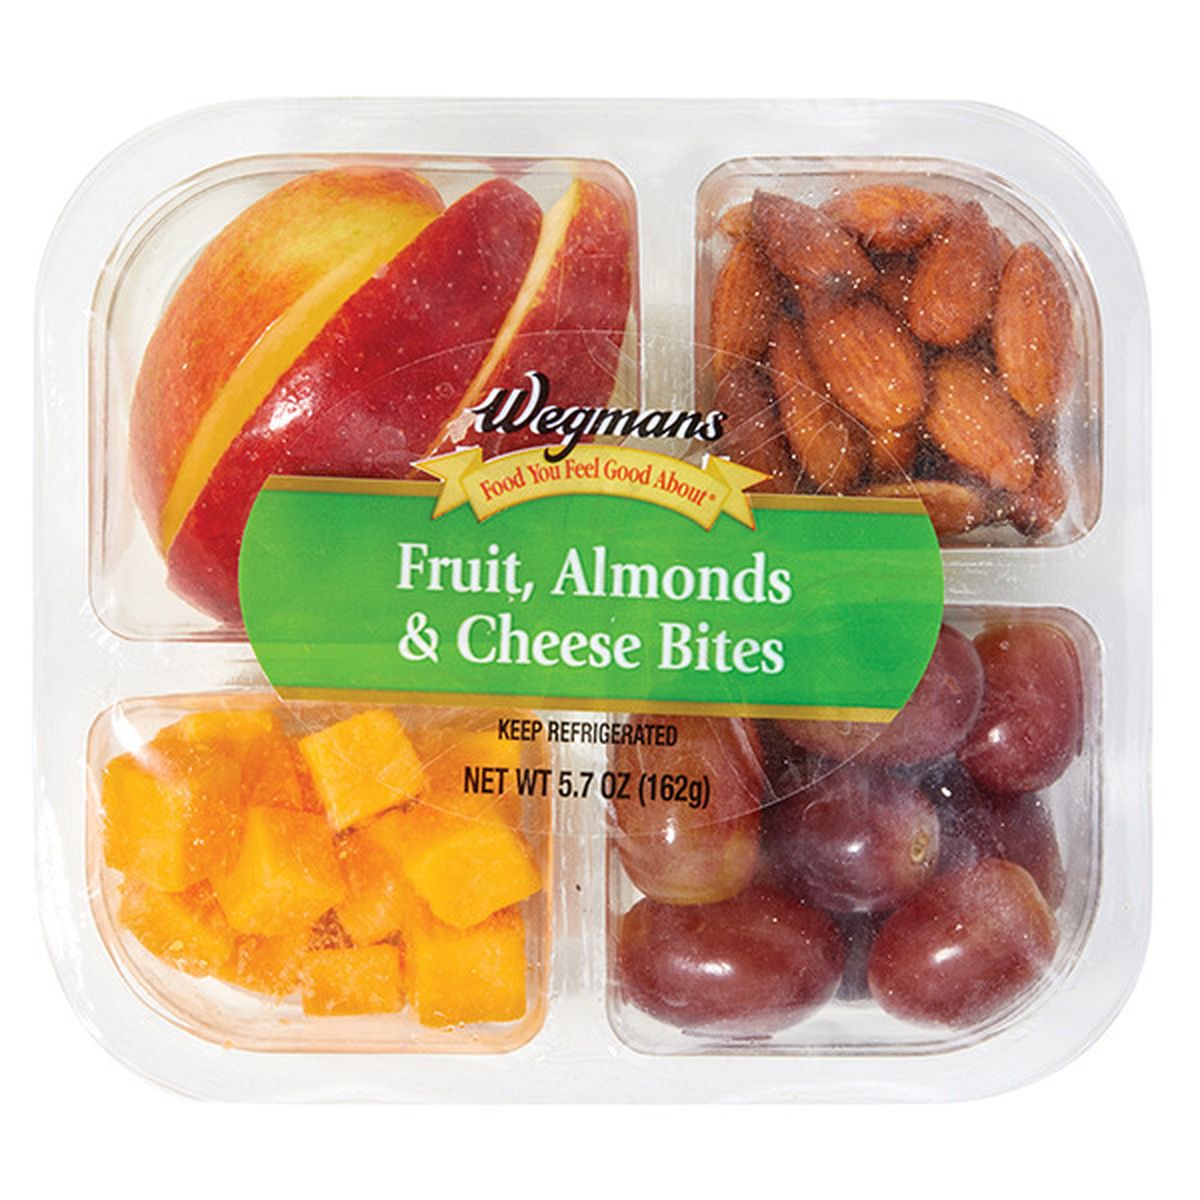 Calories in Wegmans Fruit, Almonds & Cheese Bites